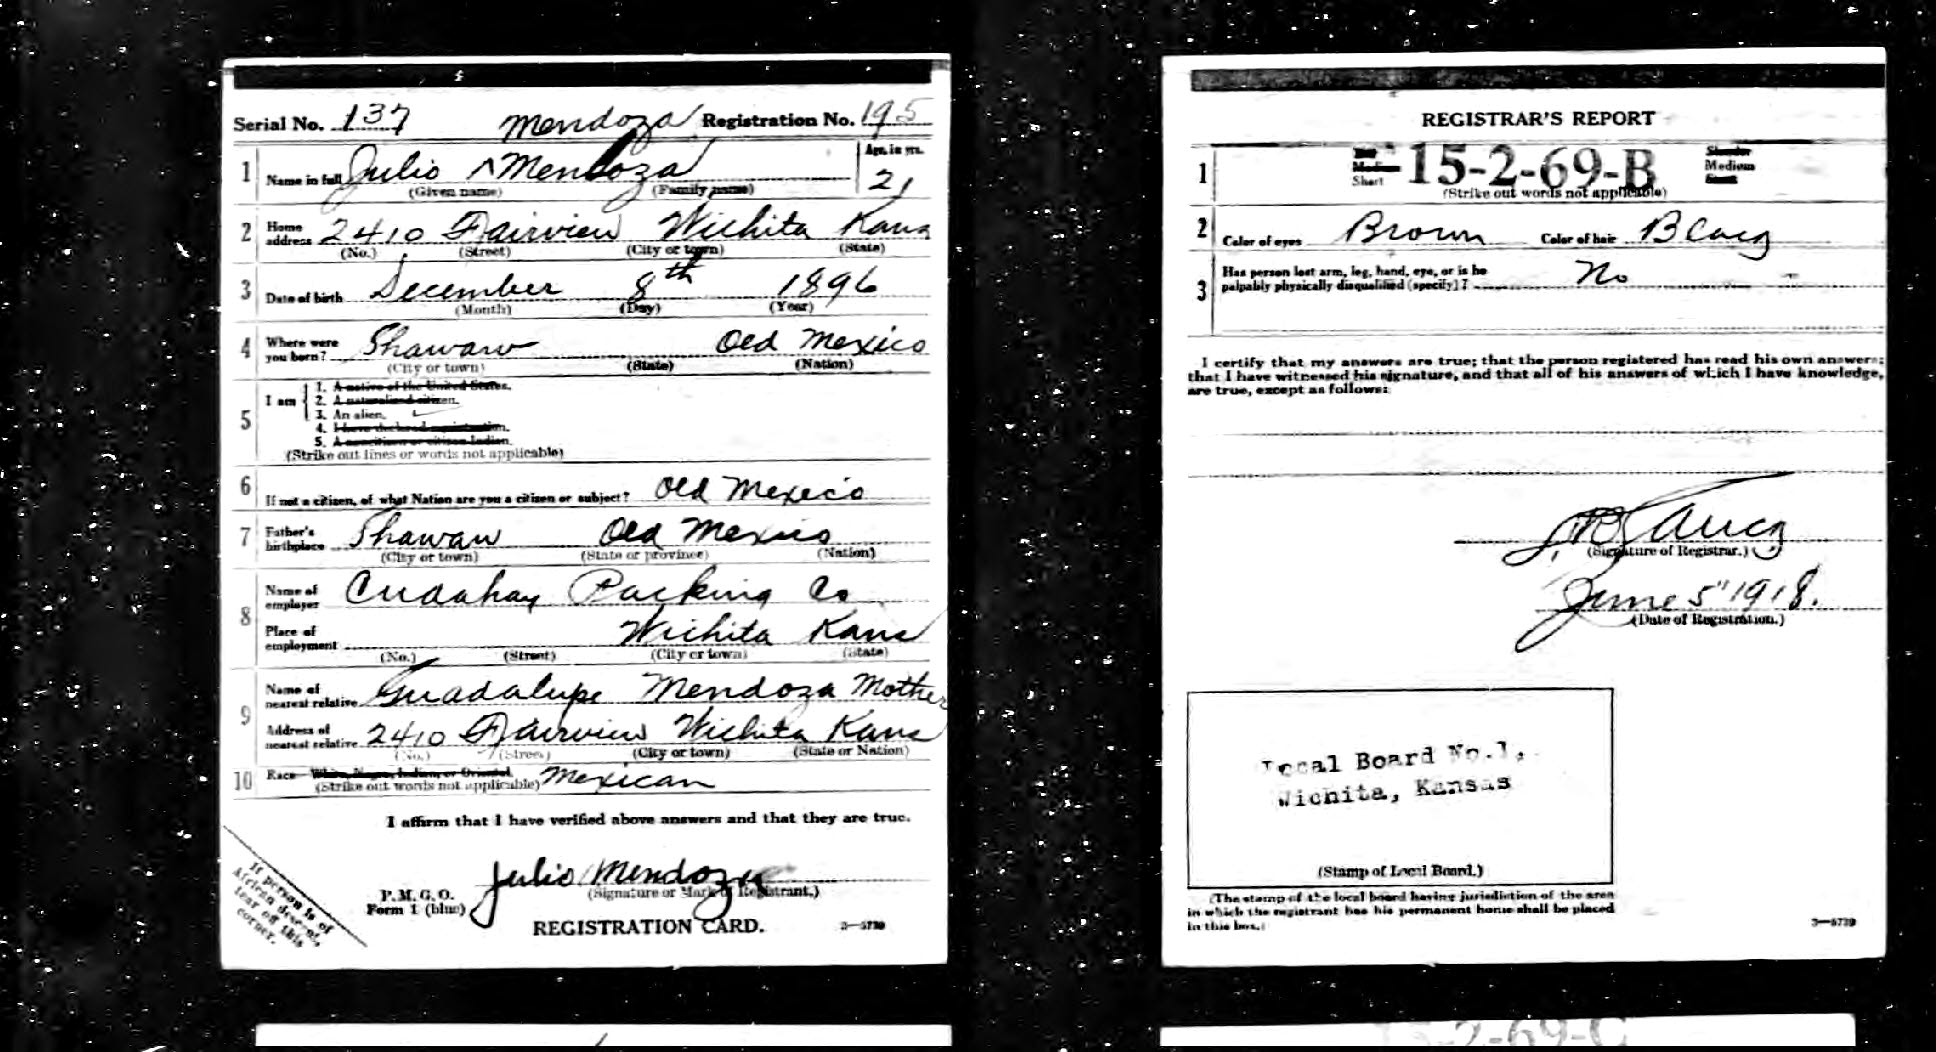 Julio Mendoza'a World War One Registration